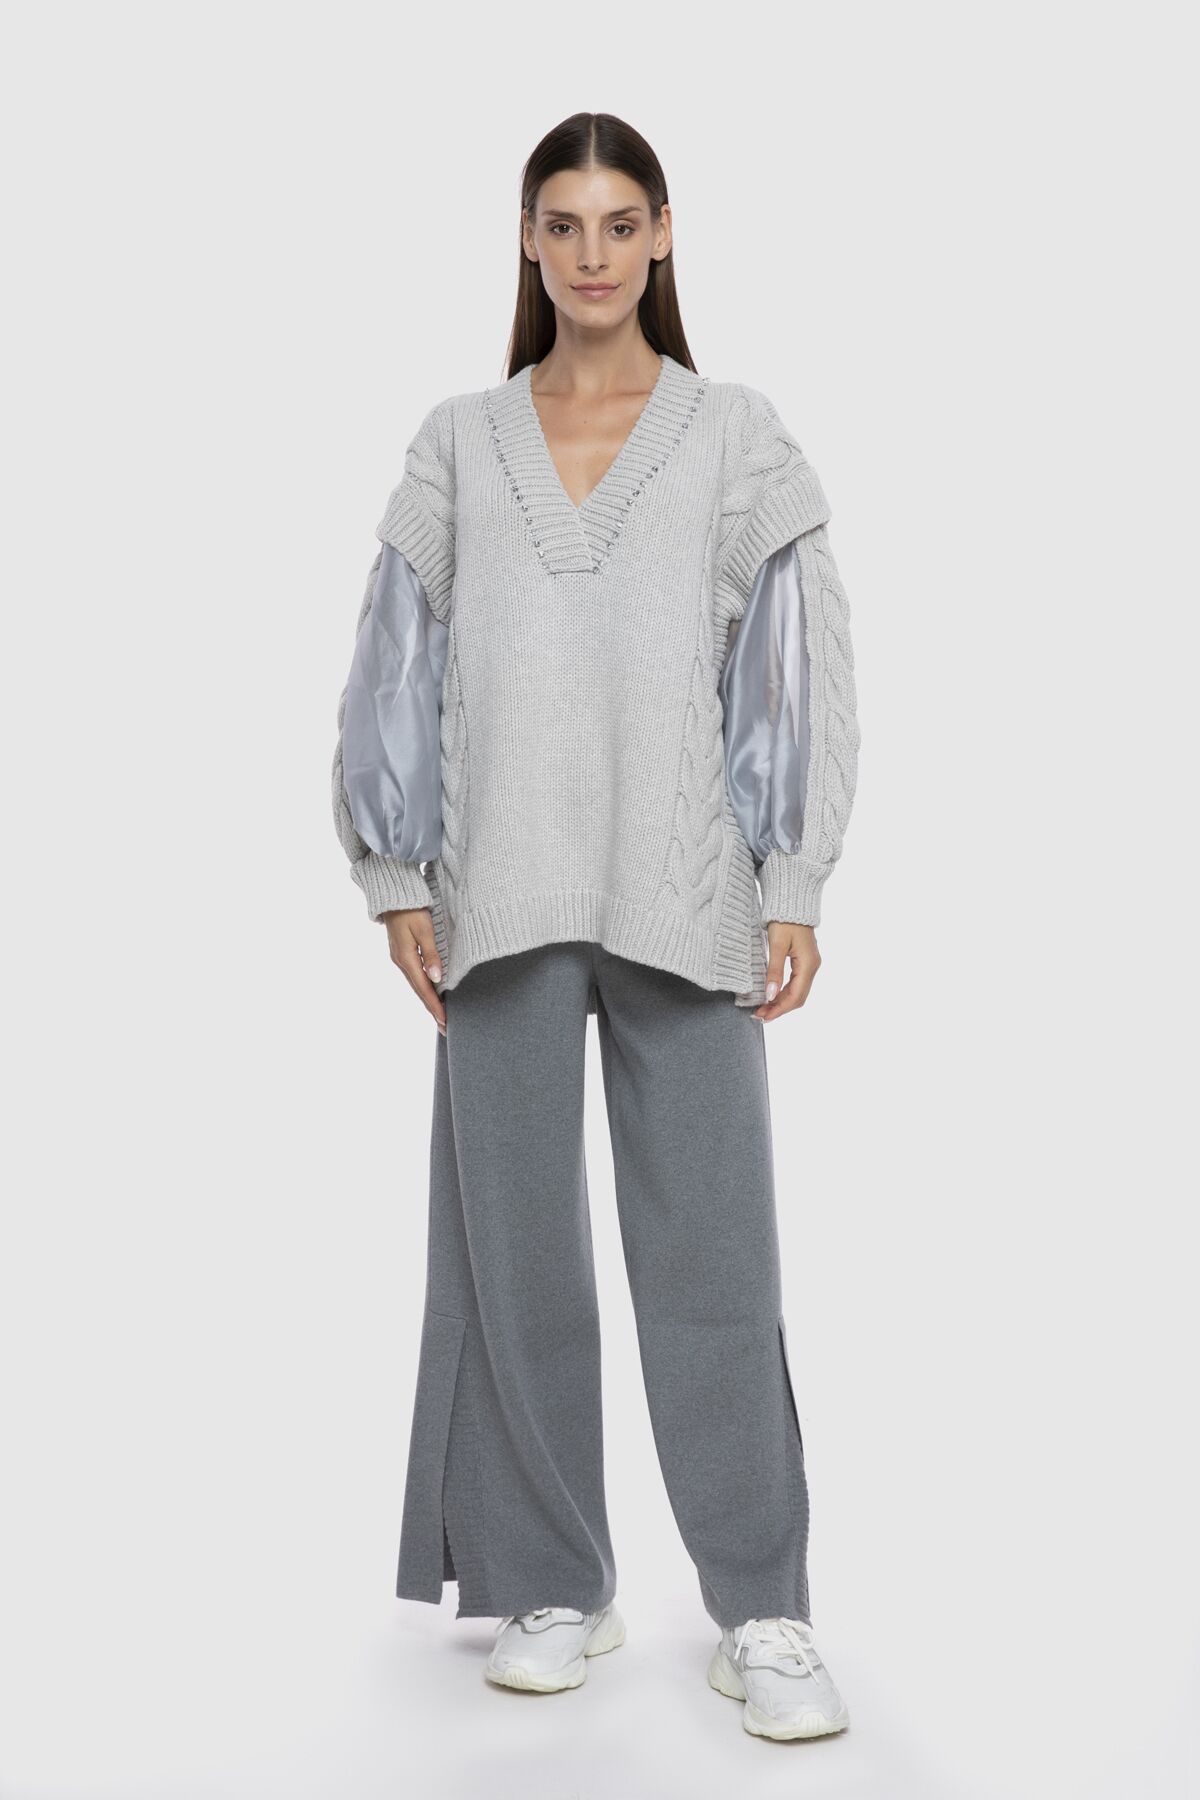  GIZIA - Transparent Balloon Sleeve Gray Knitwear Tunic